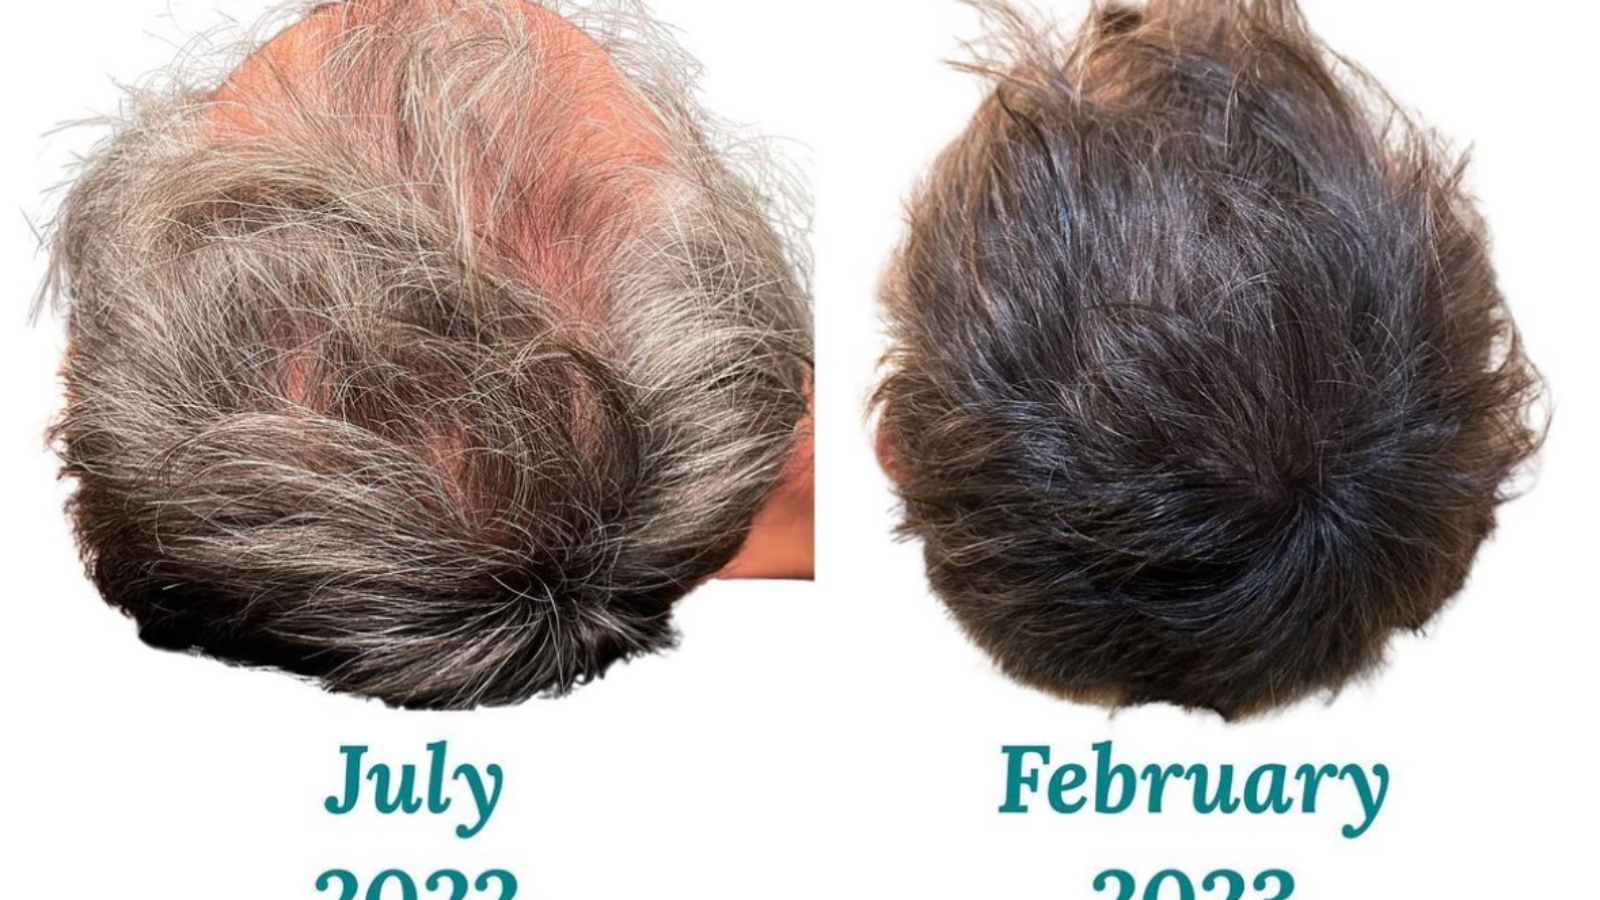 hair loss treatment. hair restoration results